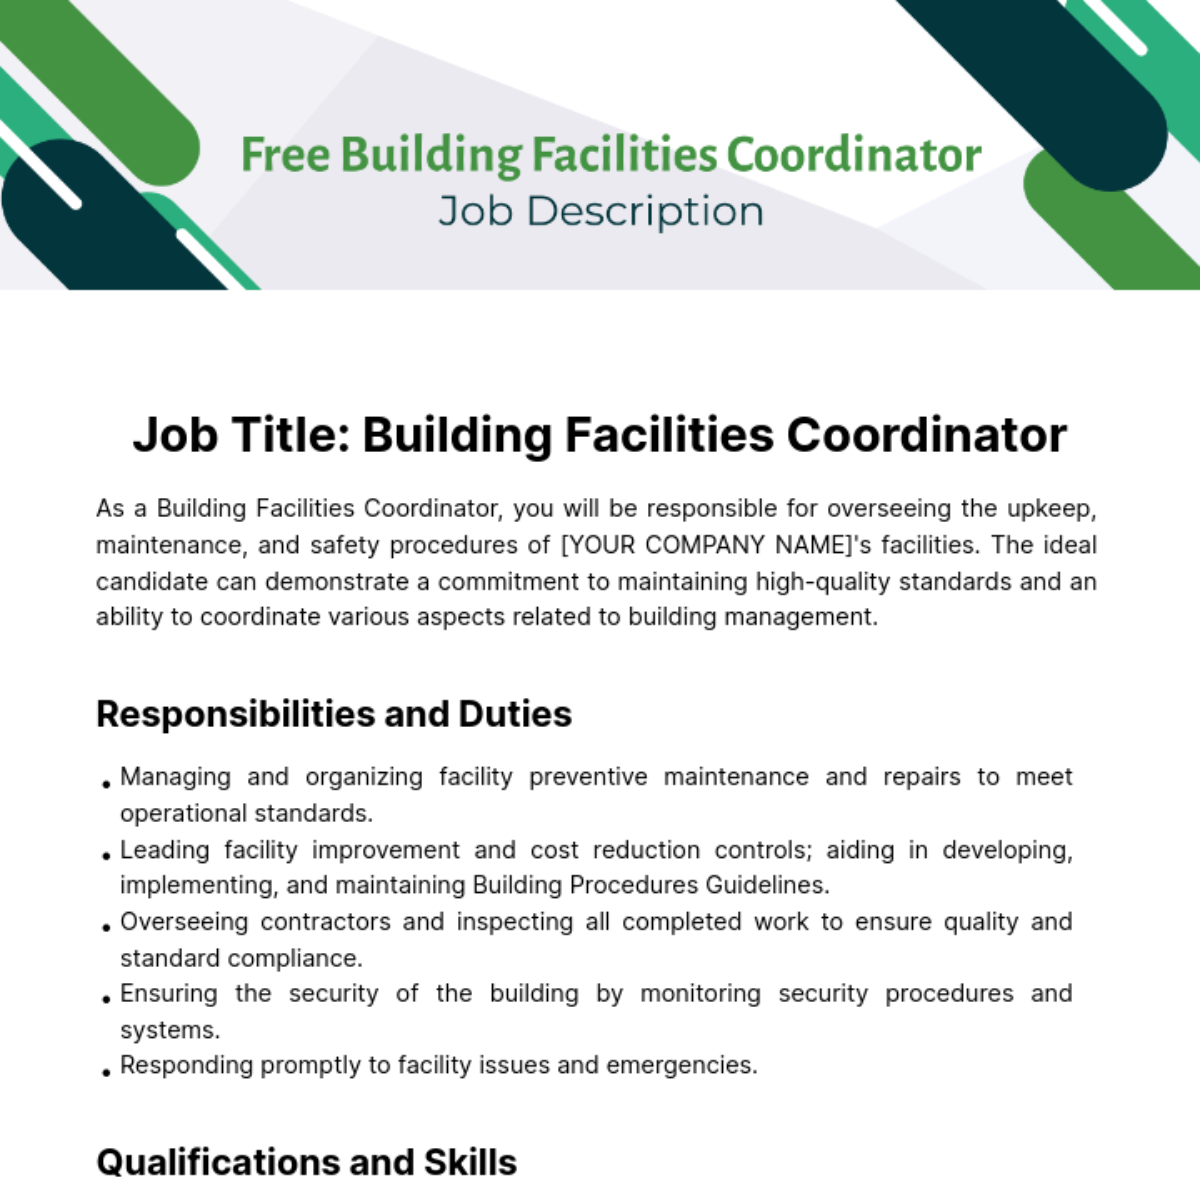 Free Building Facilities Coordinator Job Description Template